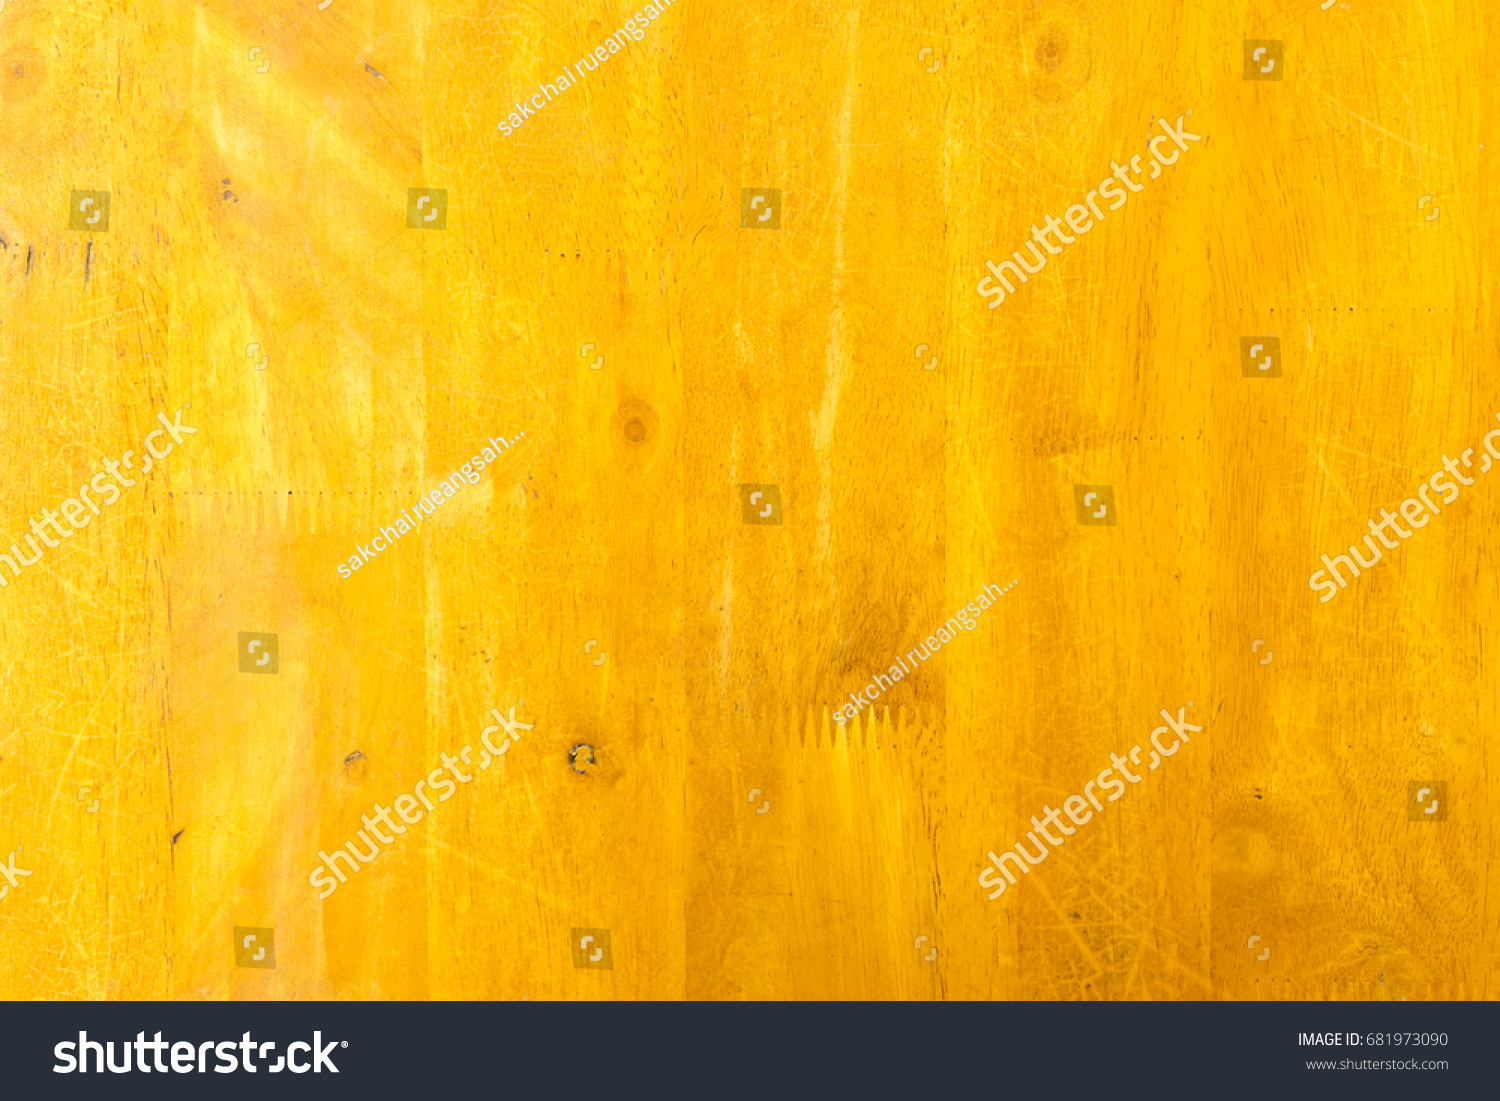 Wood Yallow Texture Use Work Screen Stock Photo 681973090 | Shutterstock